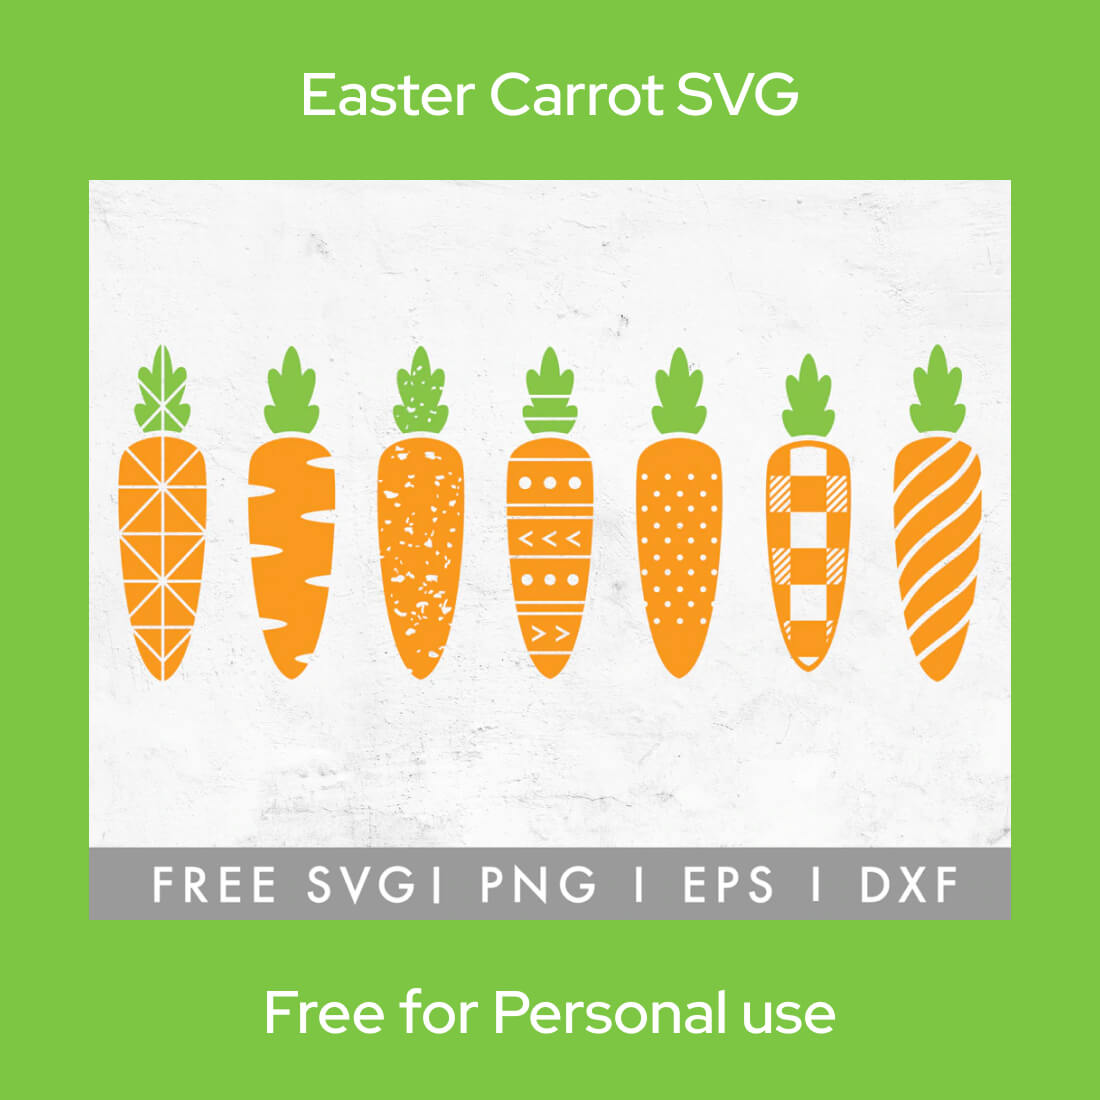 FREE Easter Carrot SVG.